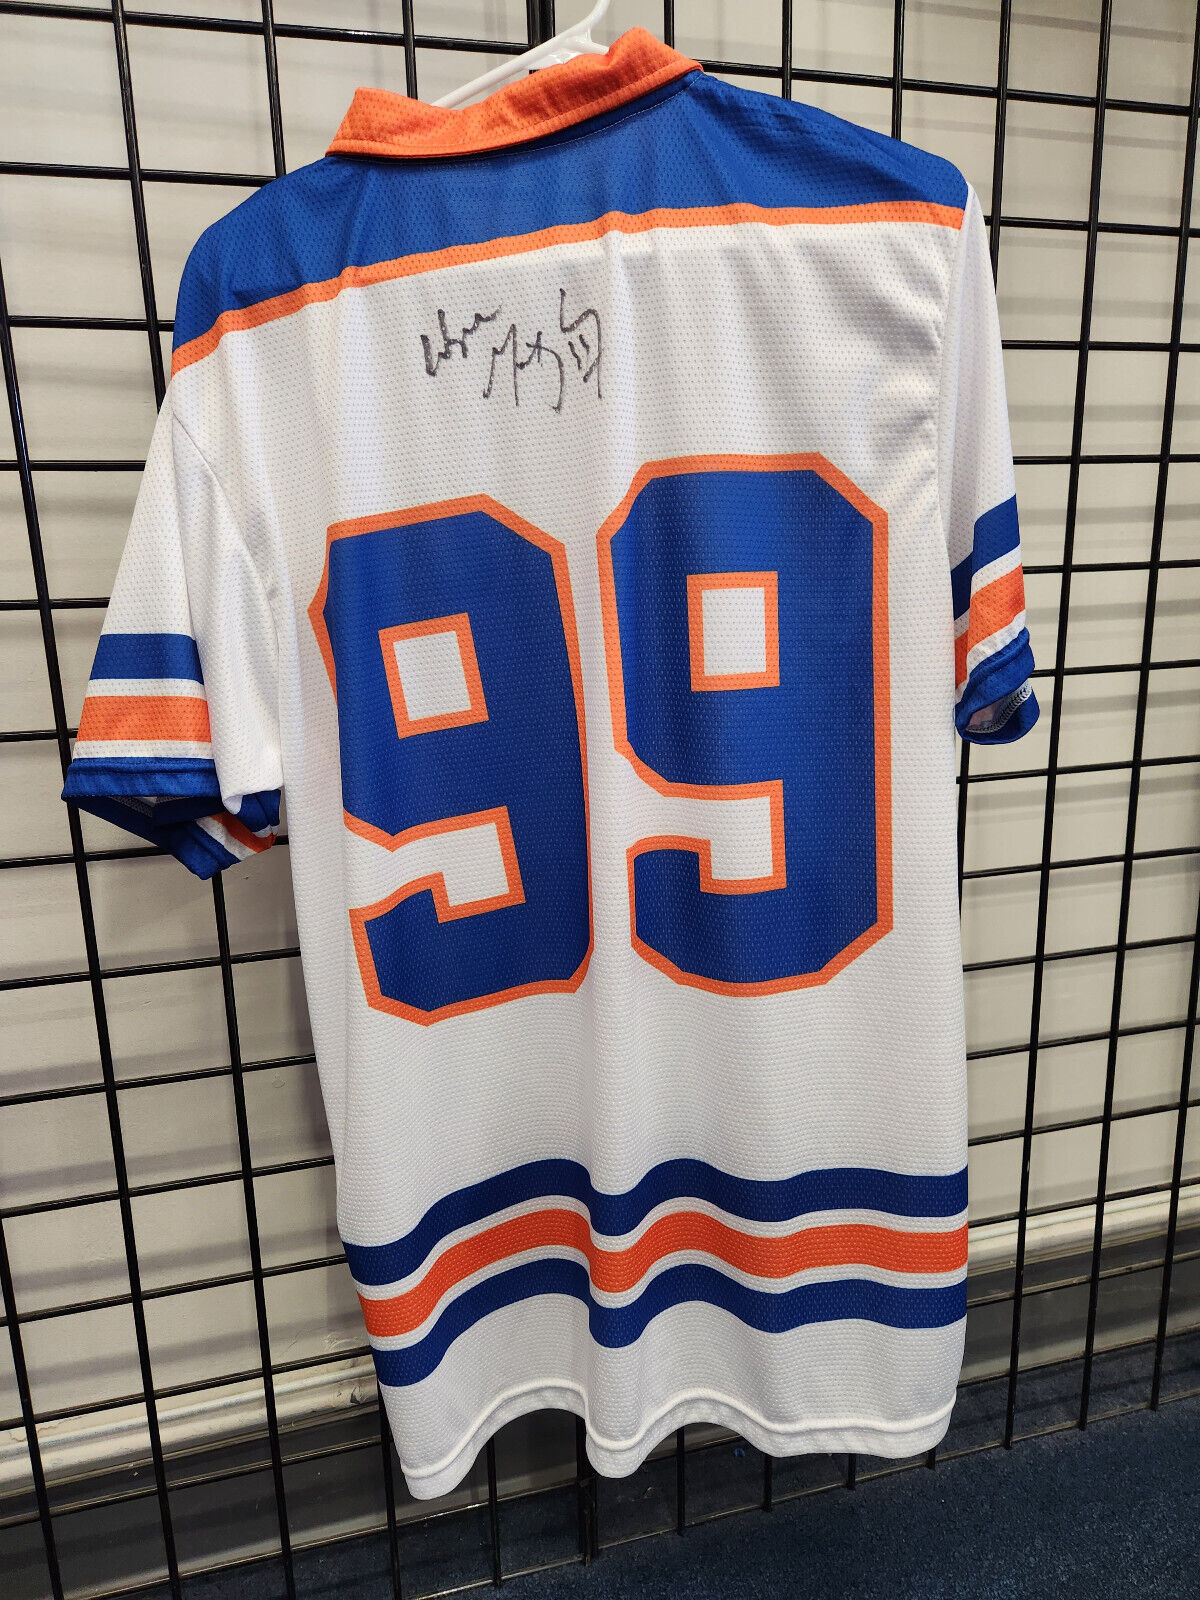 Wayne Gretzky Edmonton Oilers Autograph Jersey Style Polo Shirt Auto Psa